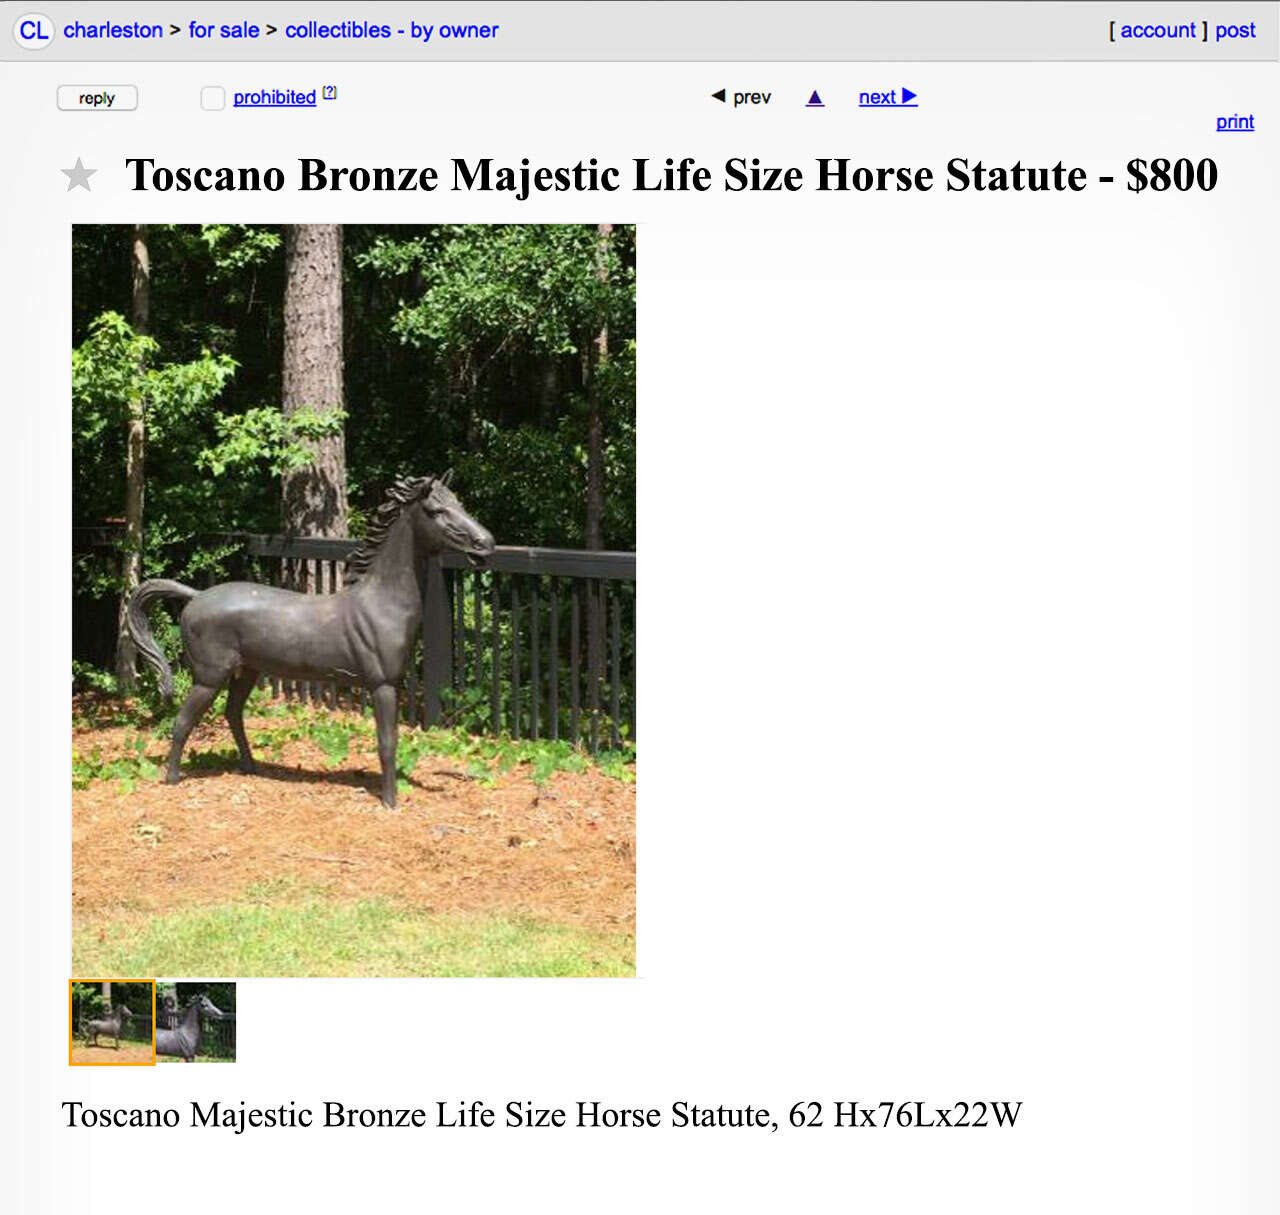 A Craigslist advertisement for a life-size horse sculpture. 